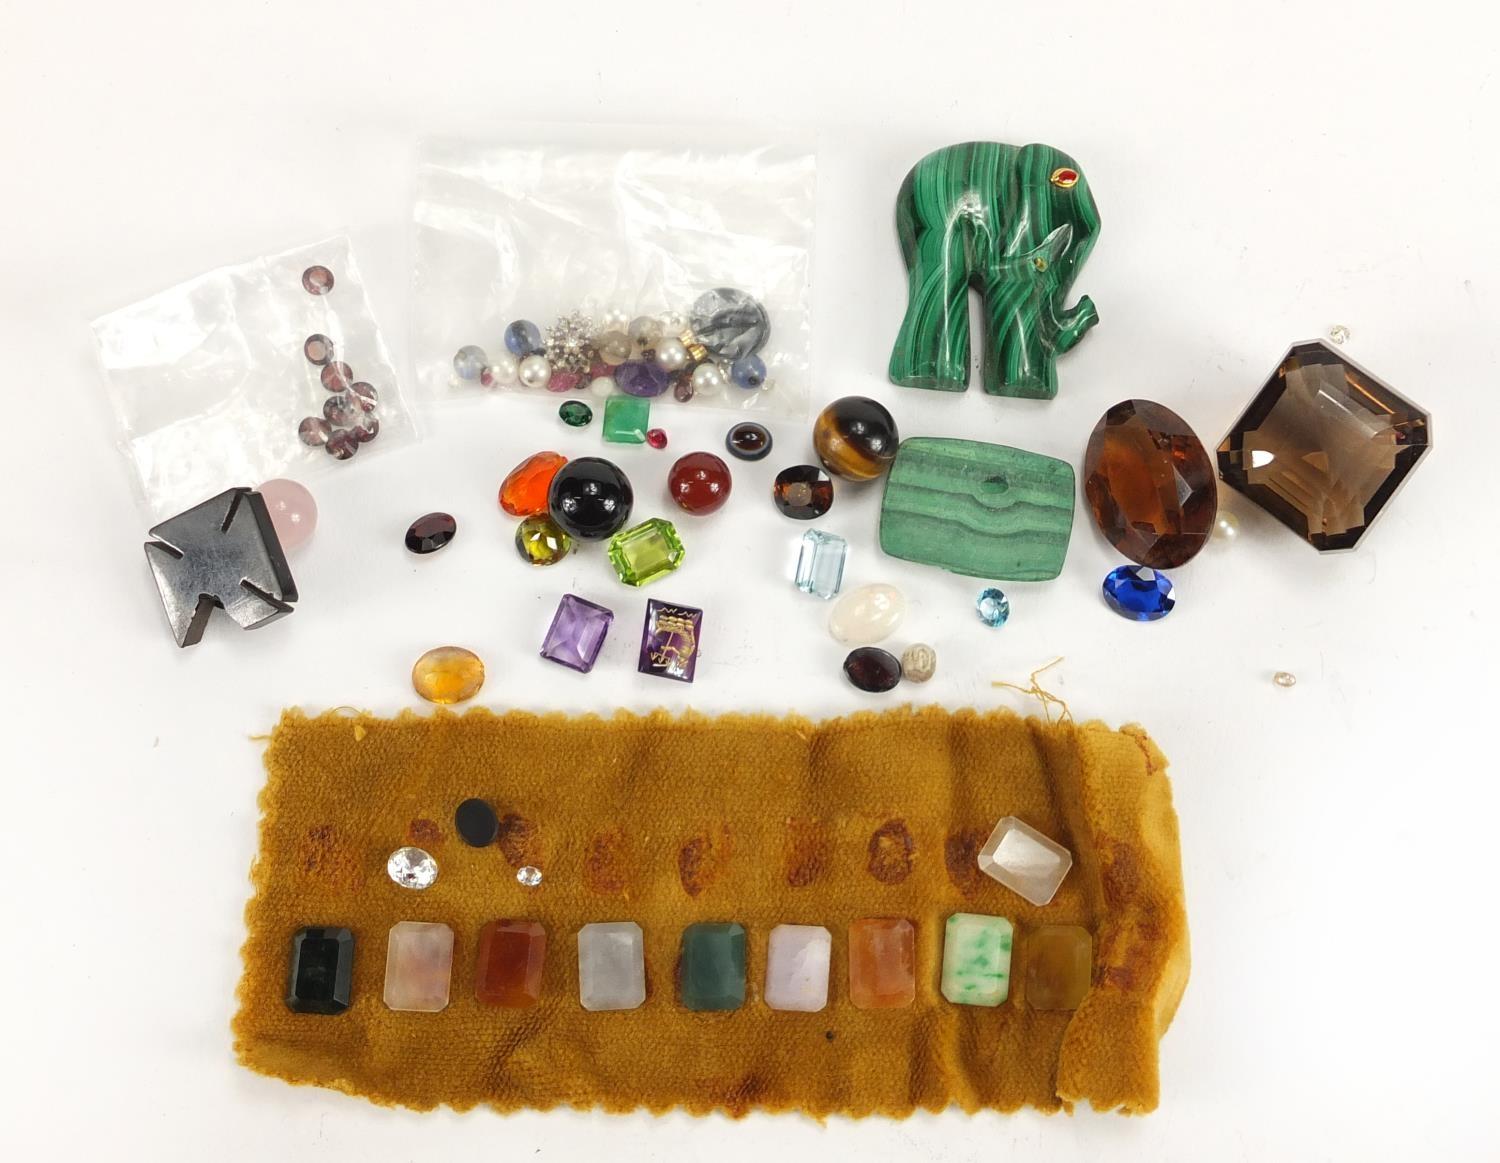 Loose semi precious stones and gems including malachite, garnets, pearls and quartz : For Further